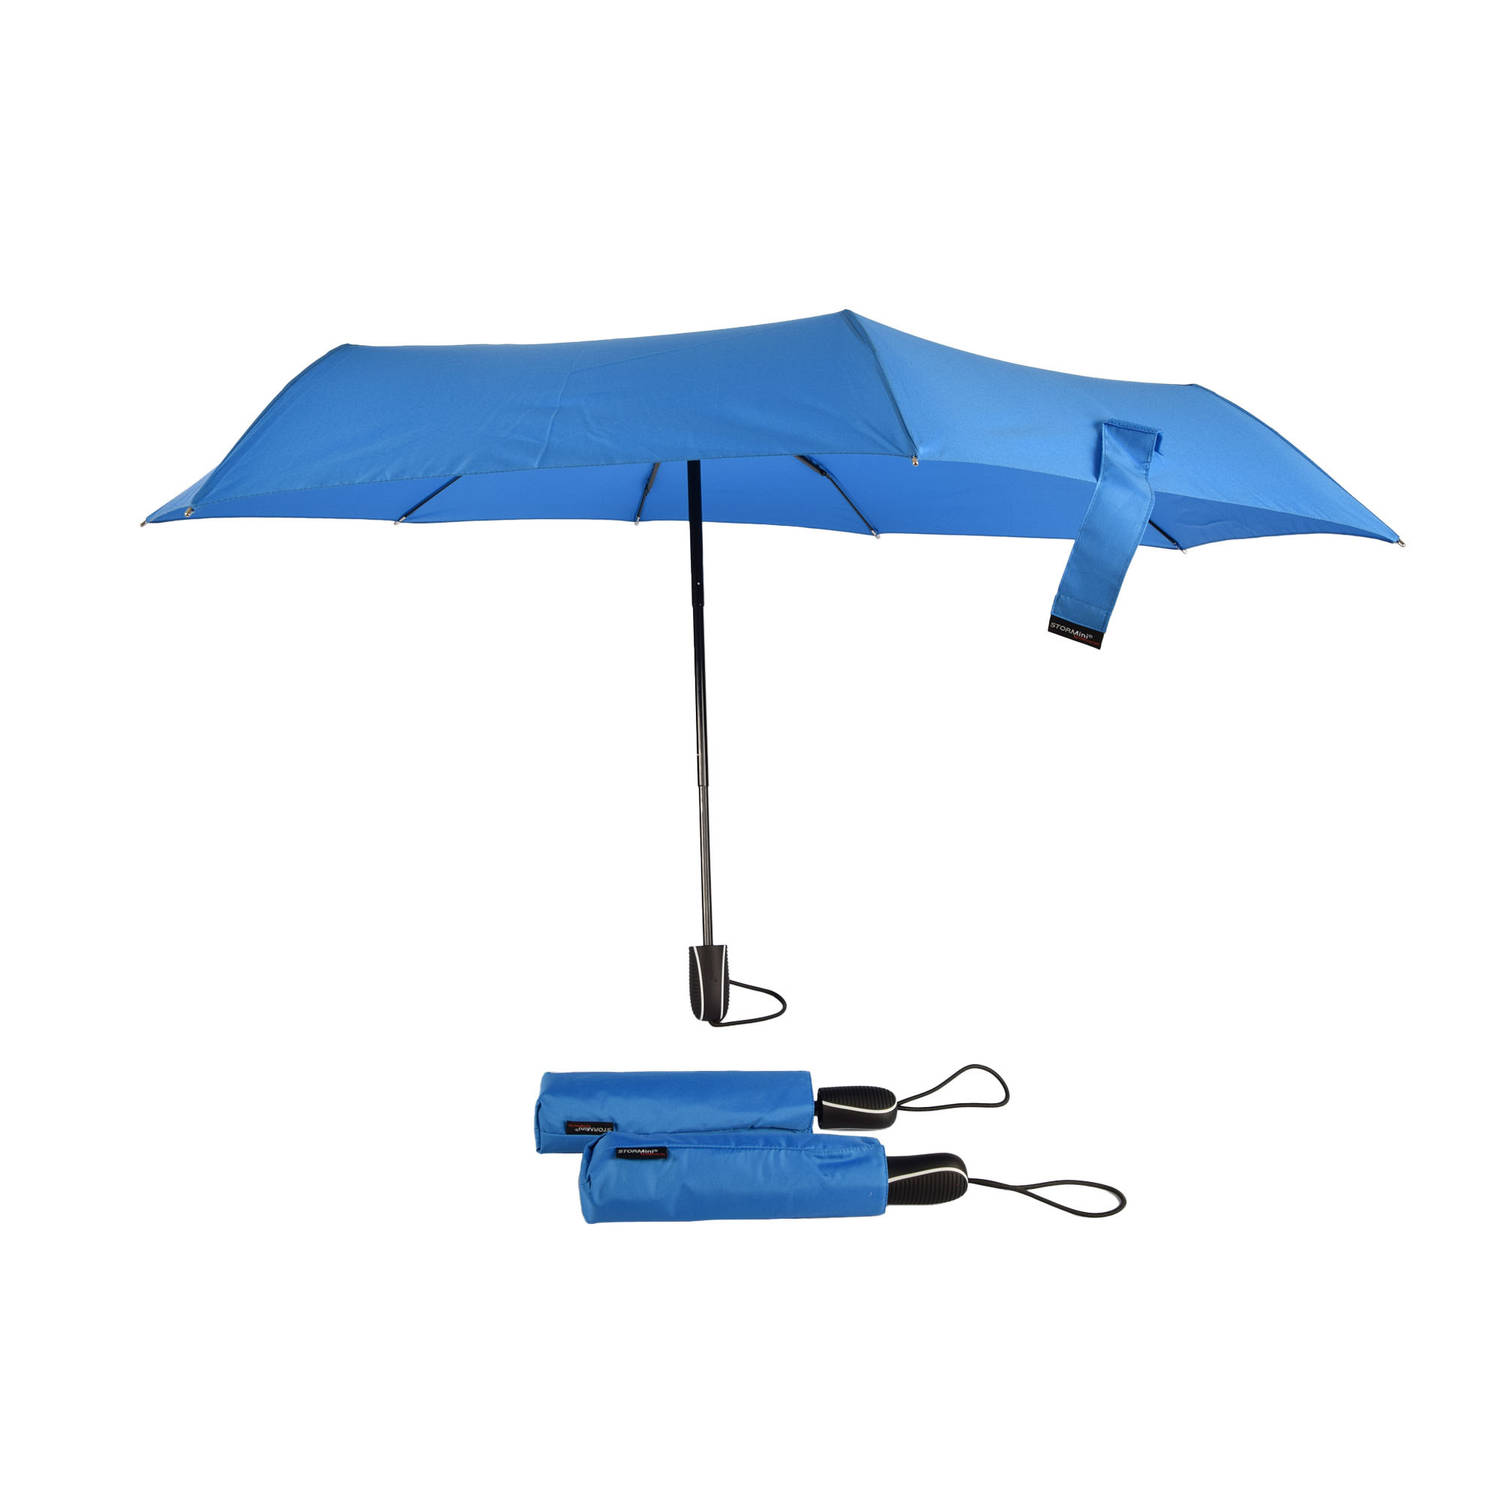 Set van 3 Opvouwbare Stormparaplu's - Automatisch - Windproof tot 80km/u - Grote Paraplu - Blauw - Aluminium Frame - Polyester Pongee Doek - Inclusief Beschermhoes